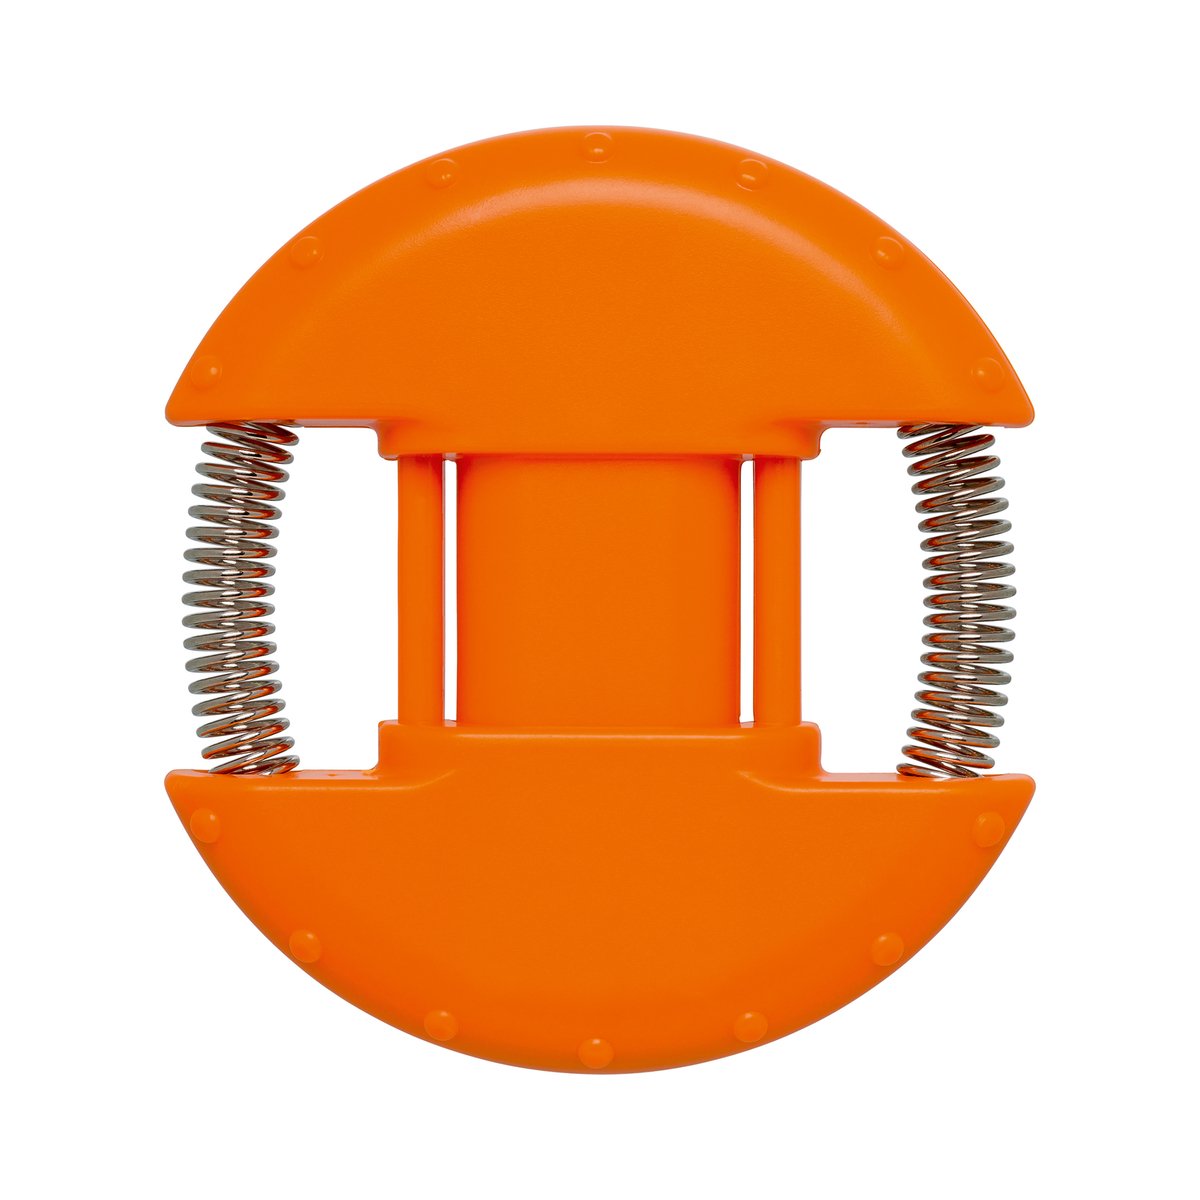 Handtrainer REFLECTS-IVALO orange